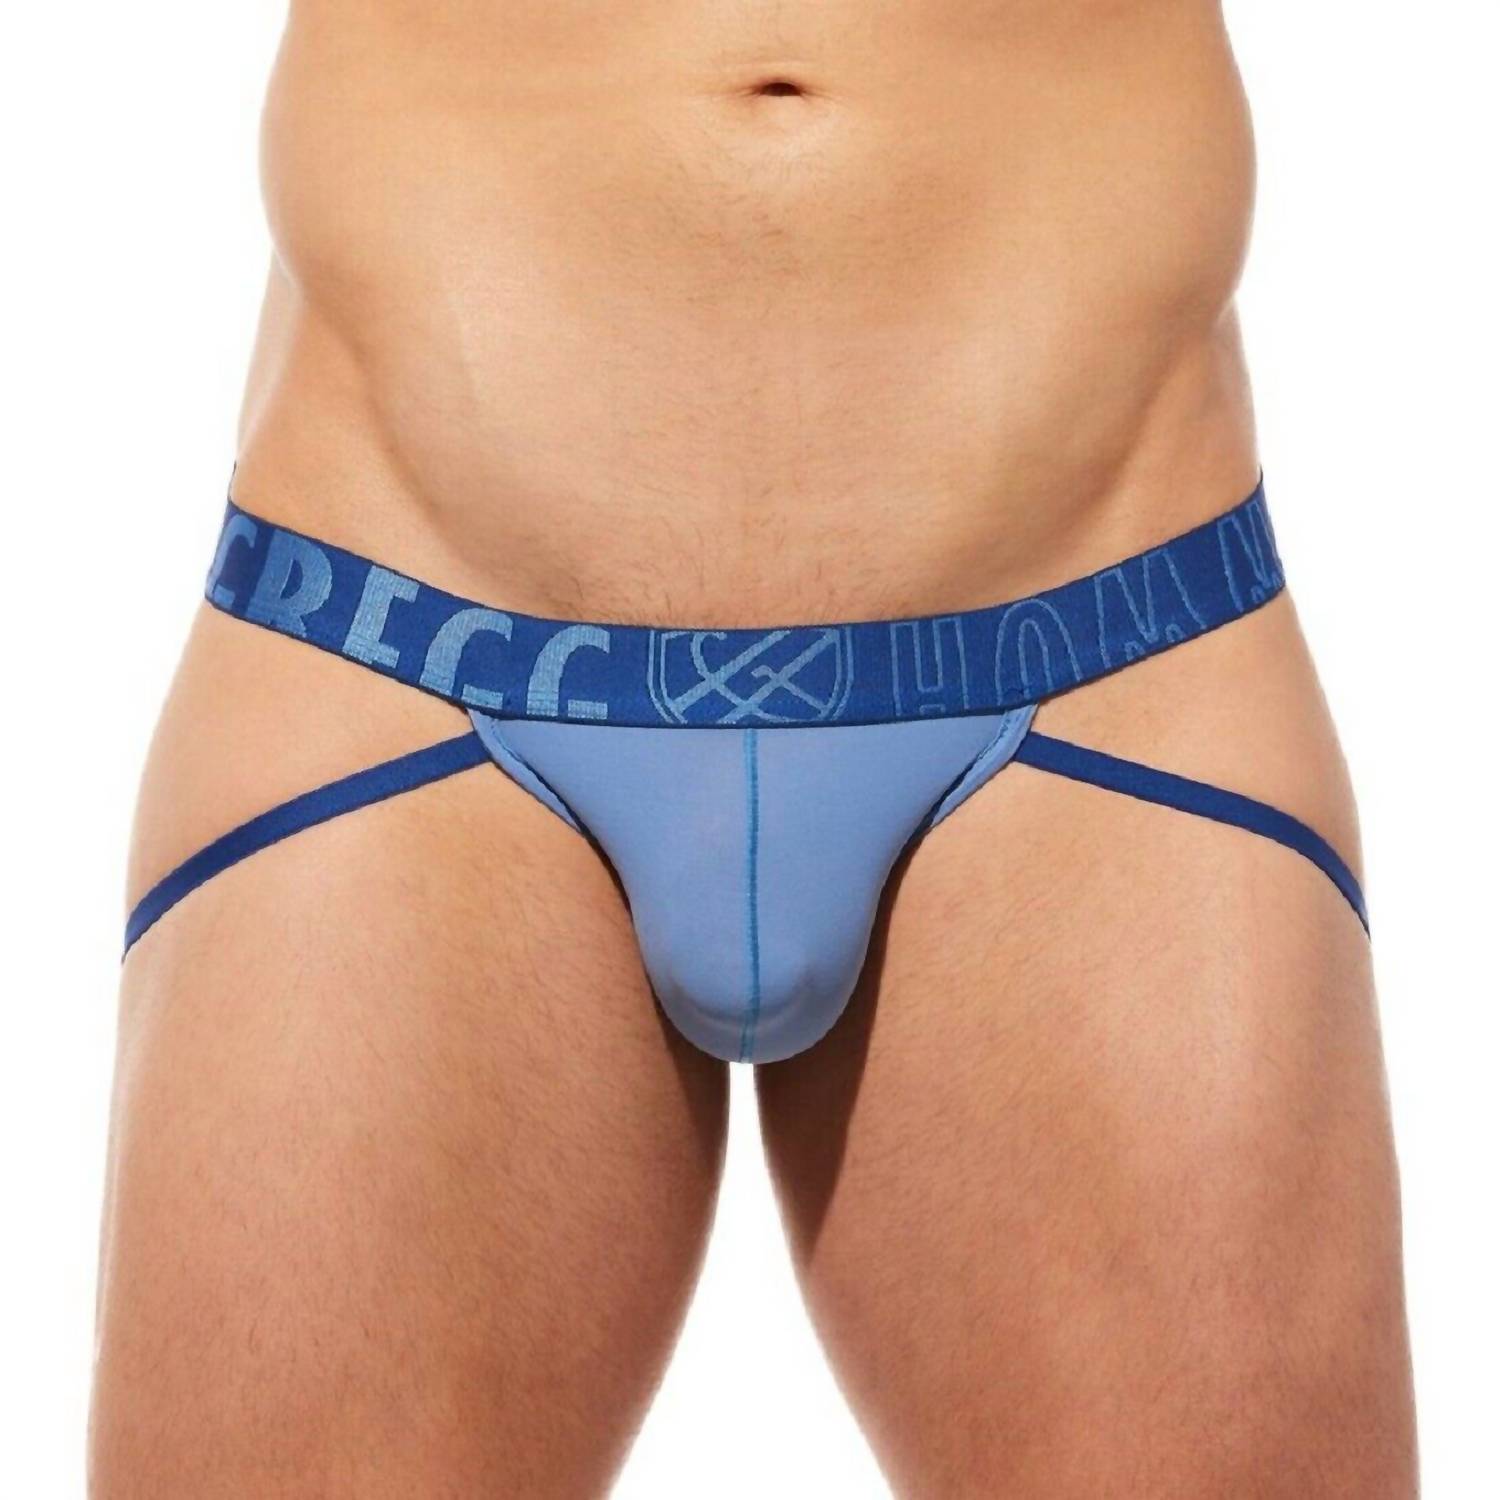 Gregg Homme - Men's Jock Strap Underwear